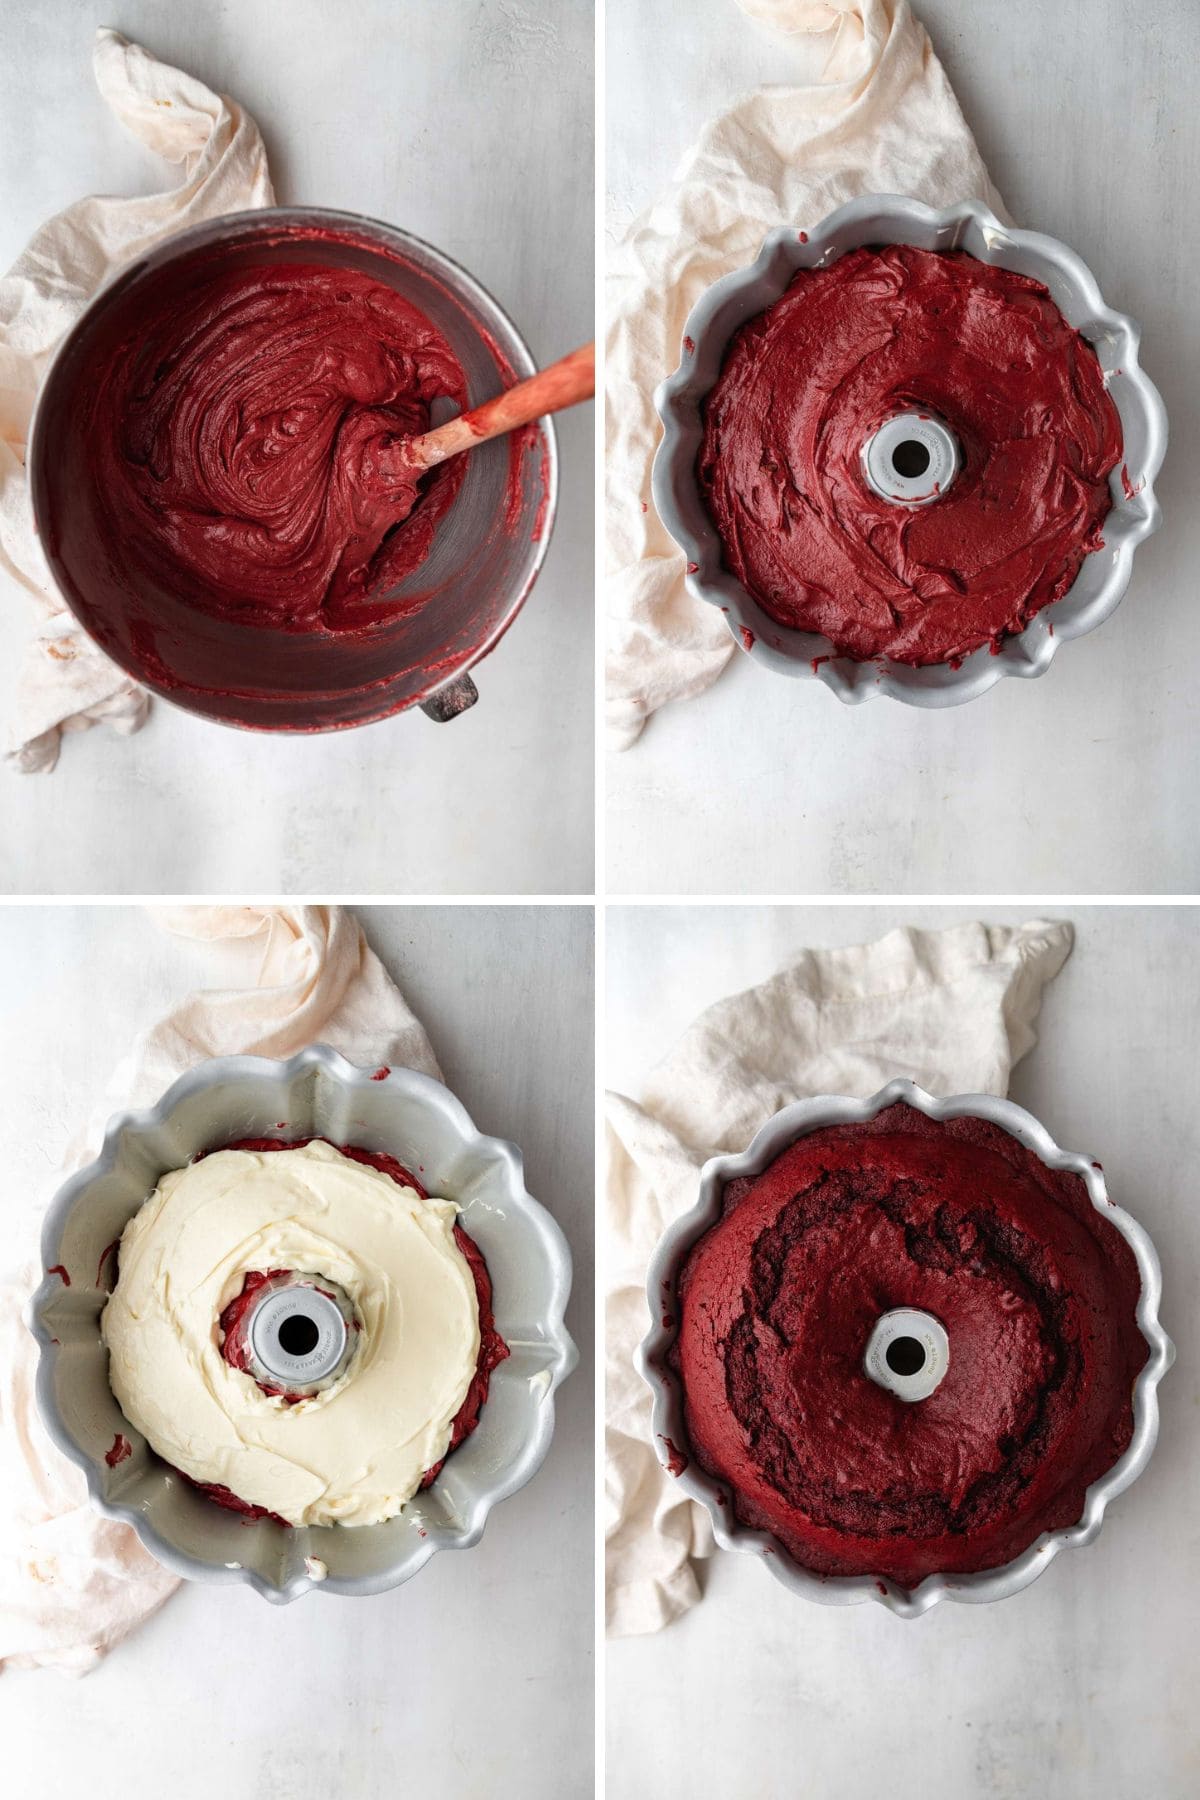 Red Velvet Cheesecake Bundt Cake collage preparing batter, layering in pan, and baked cake